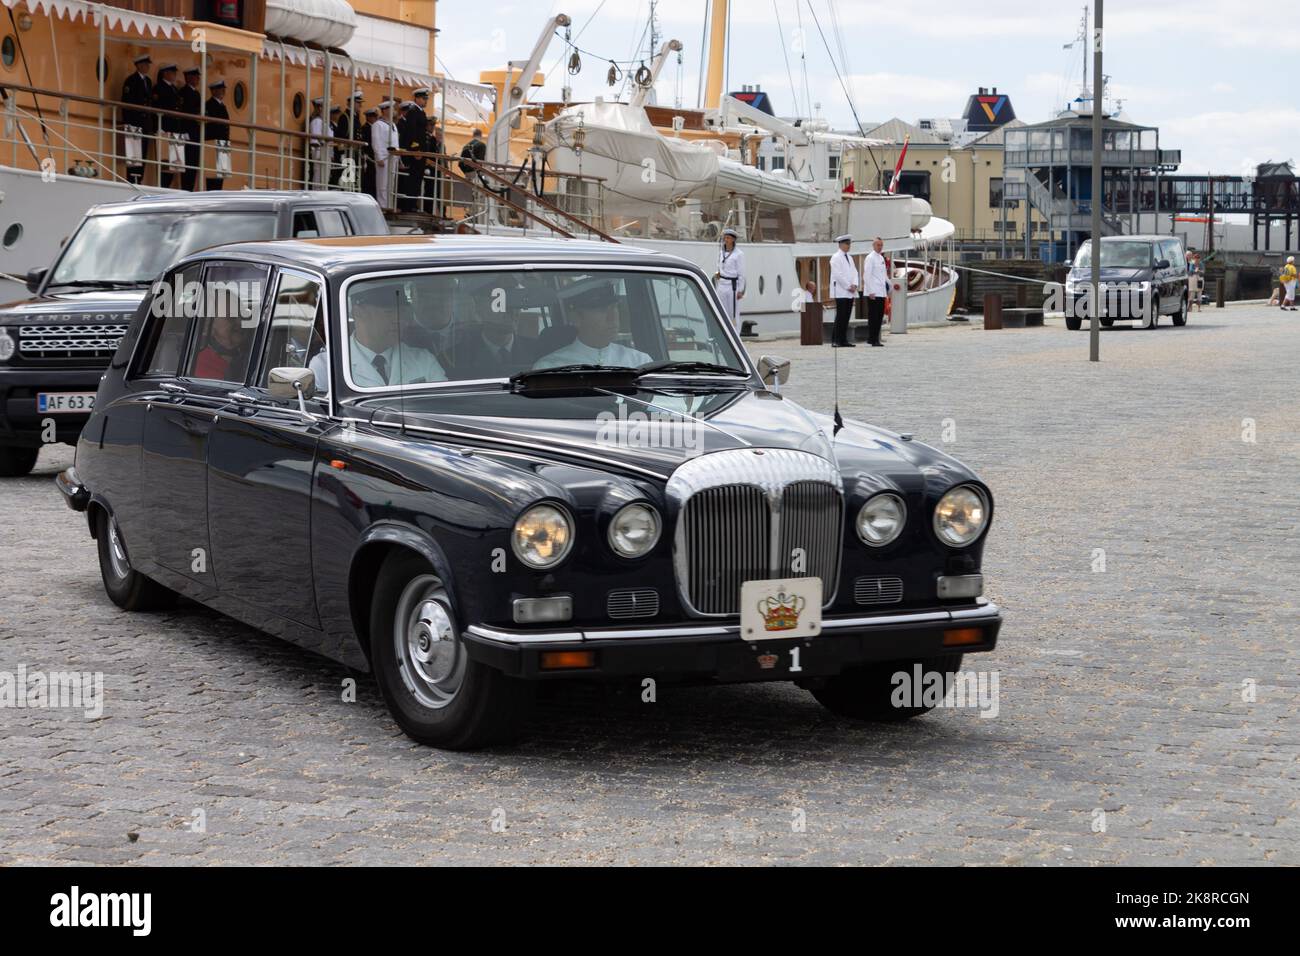 a black Rolls Royce near Navy ship with danish royal family member at the docks of Helsingor, Denmark Stock Photo